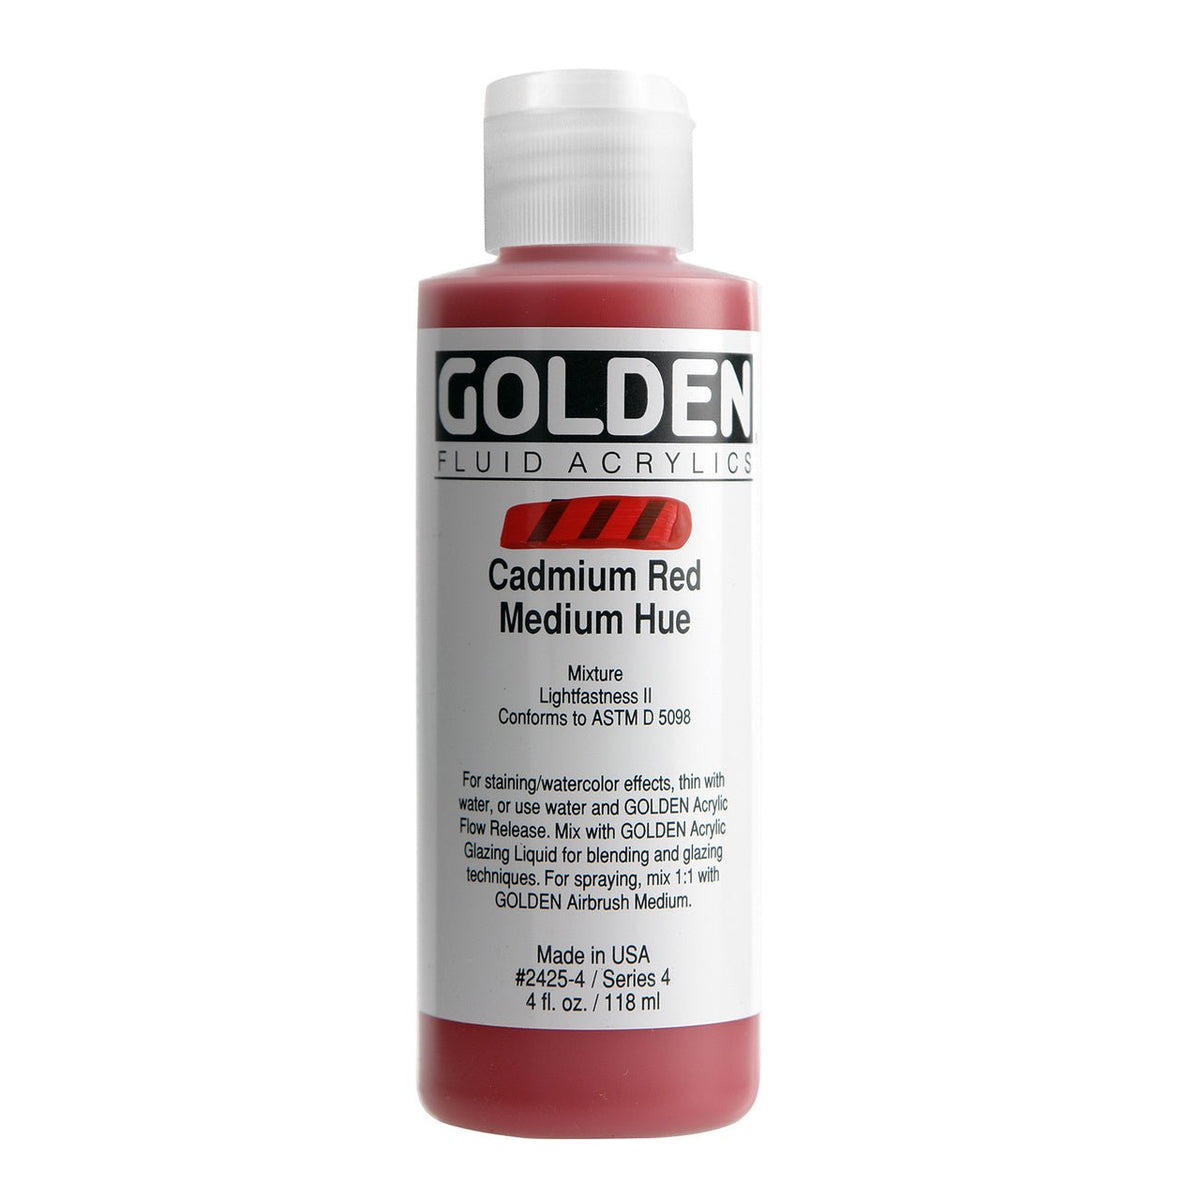 Golden Fluid Acrylic Cadmium Red Medium Hue 4 oz - merriartist.com